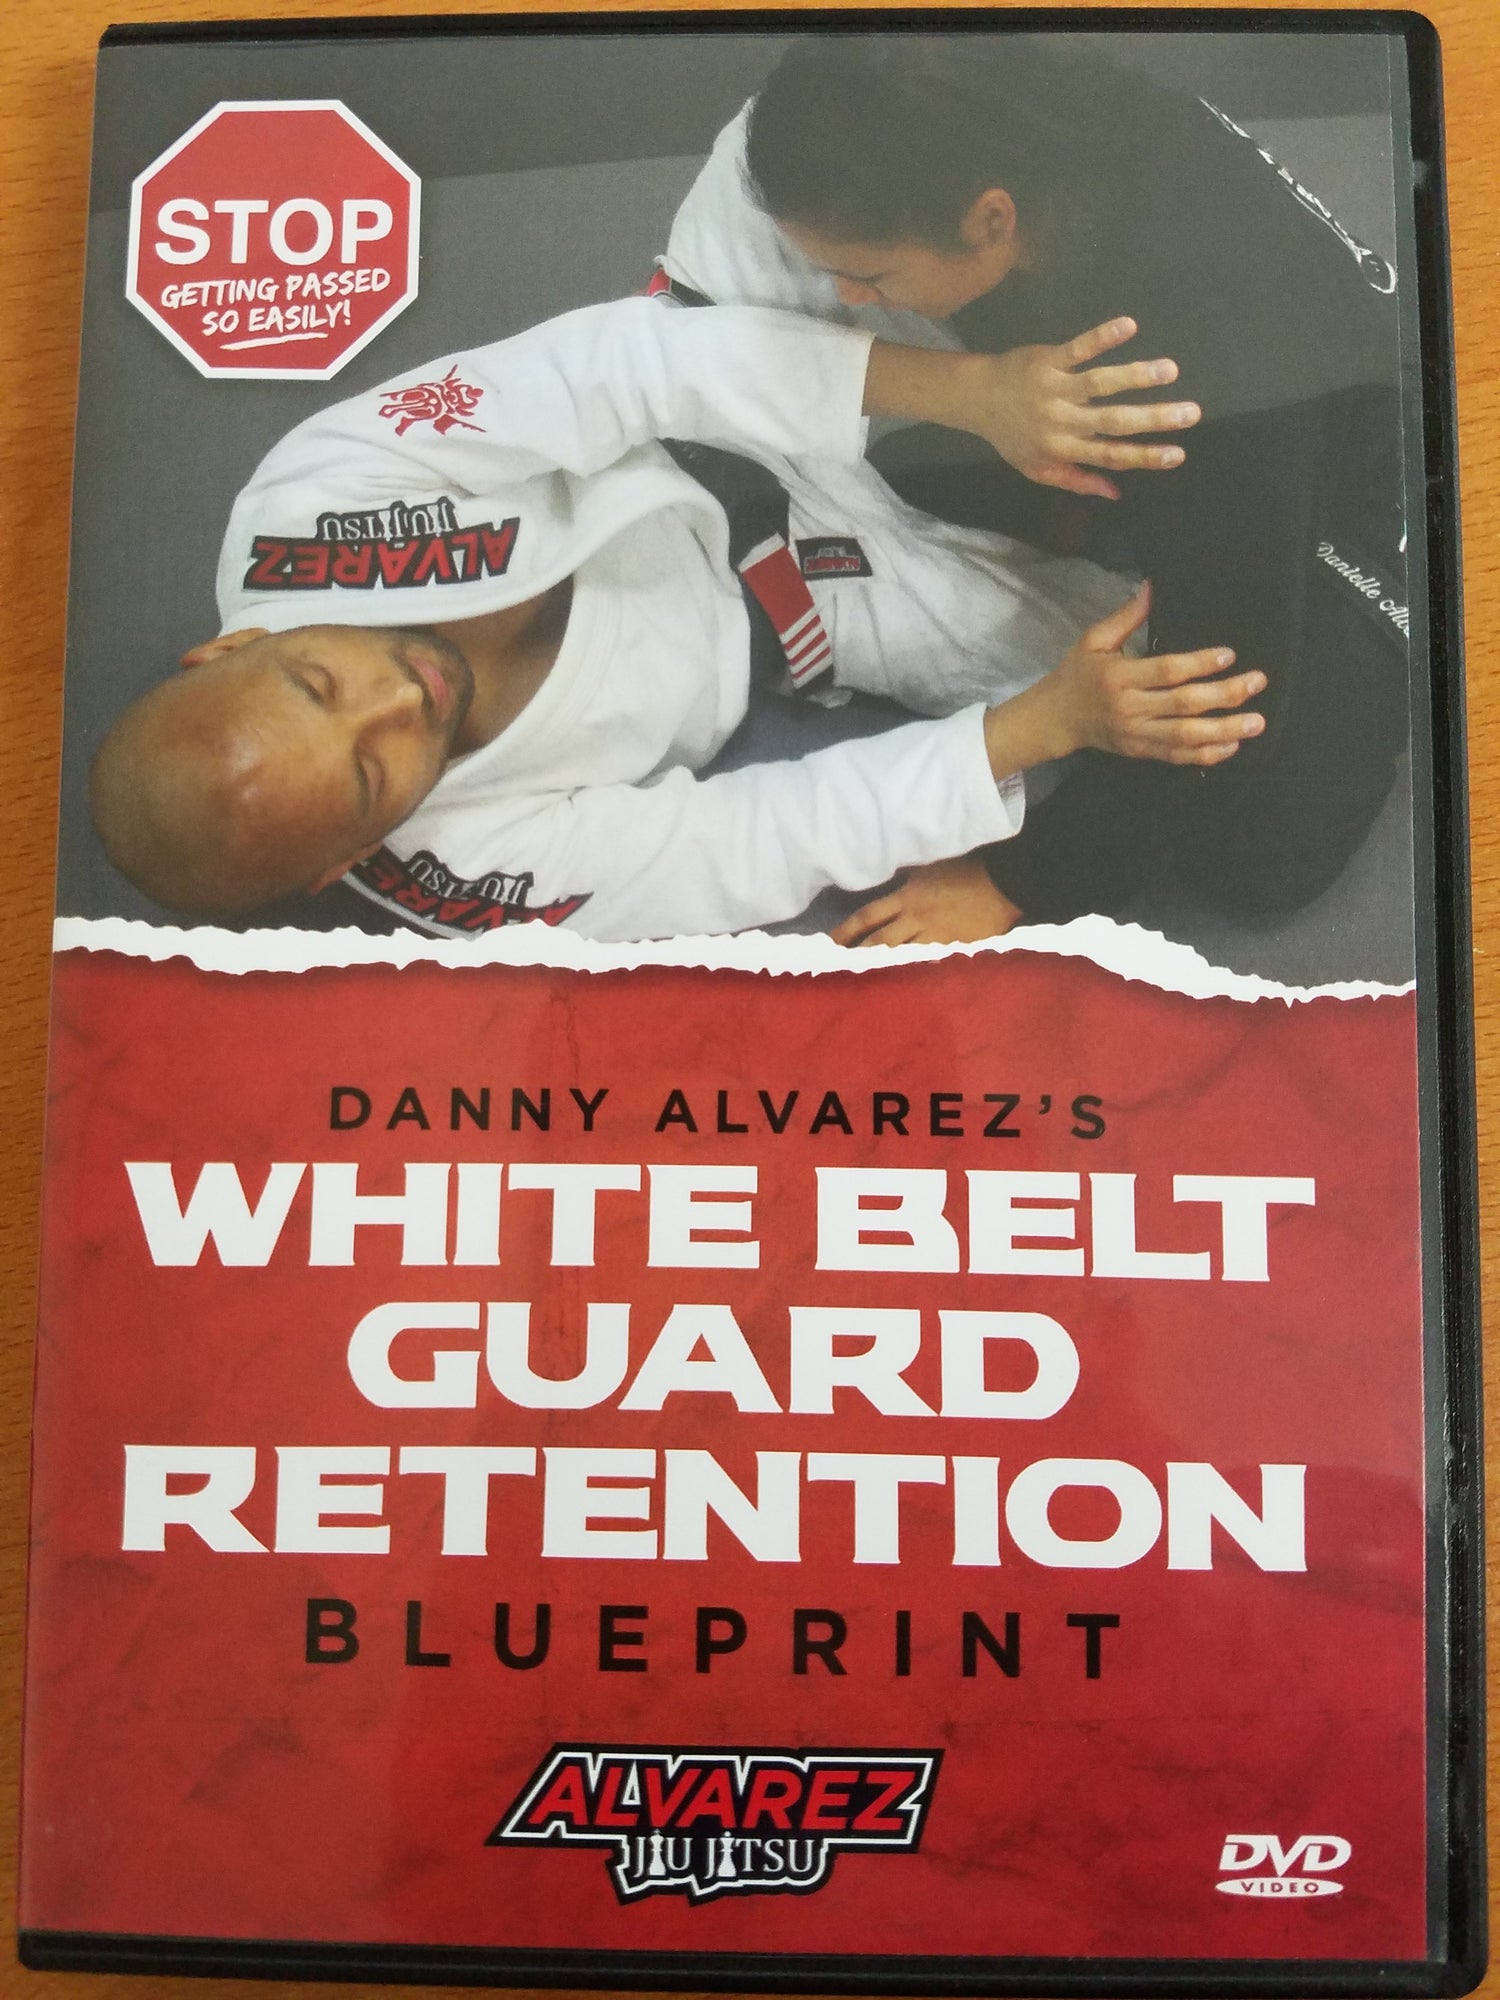 White Belt Guard Retention Blueprint 2 DVD Set by Danny Alvarez - Budovideos Inc